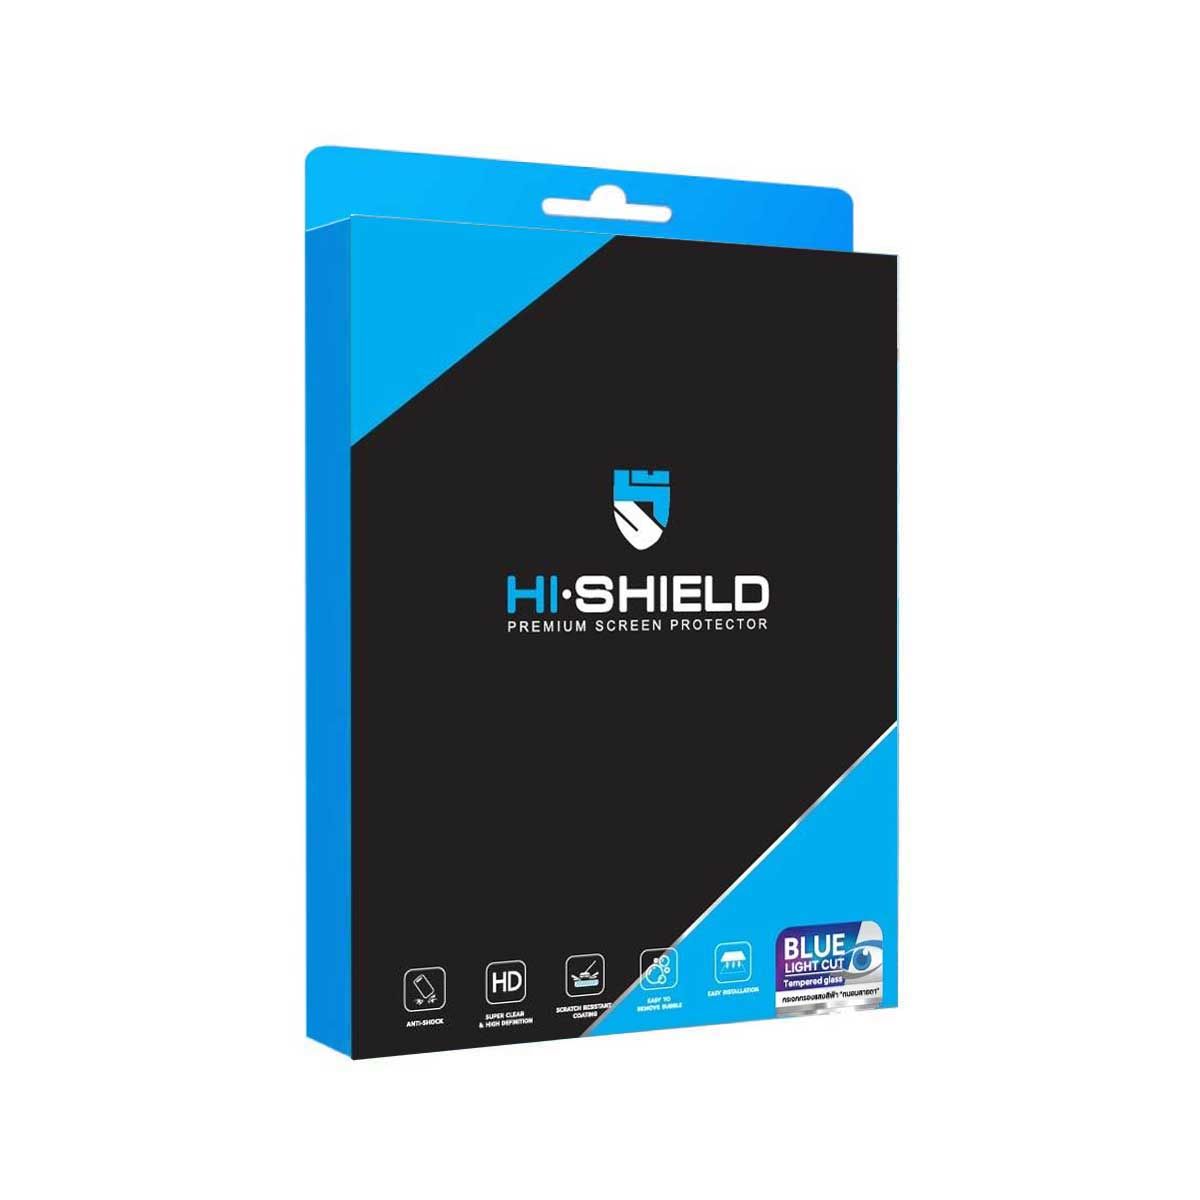 Hi-Shield Blue Light Cut Tempered Glass ฟิล์มกระจกนิรภัยถนอมสายตาสำหรับ iPad Pro 13" (2024)